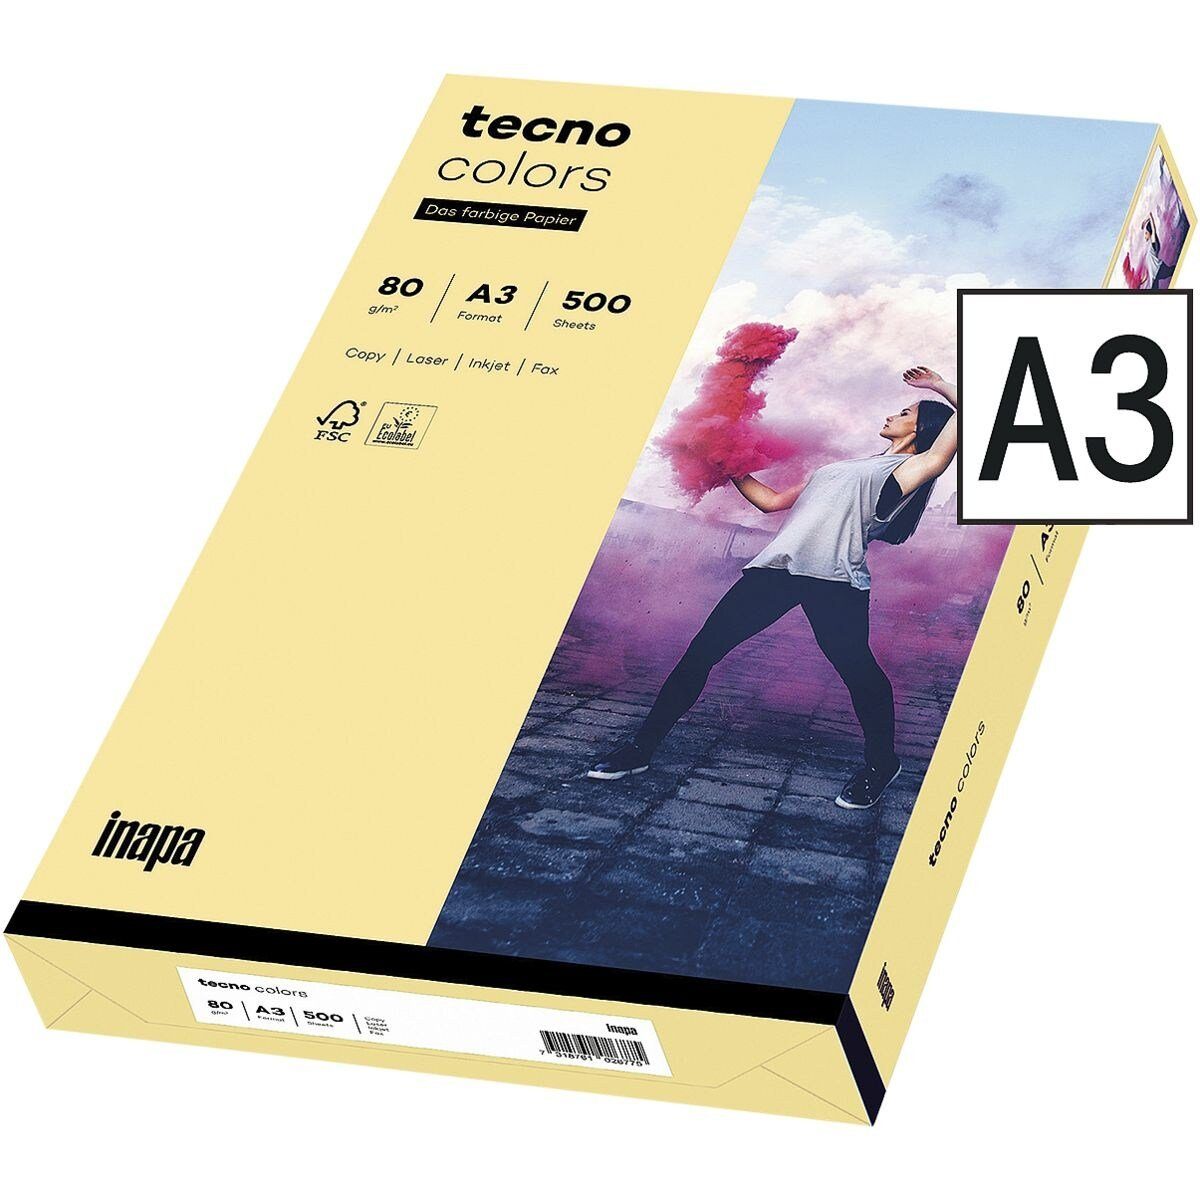 Inapa tecno Drucker- und Kopierpapier Rainbow / tecno Colors, Pastellfarben, Format DIN A3, 80 g/m², 500 Blatt chamois